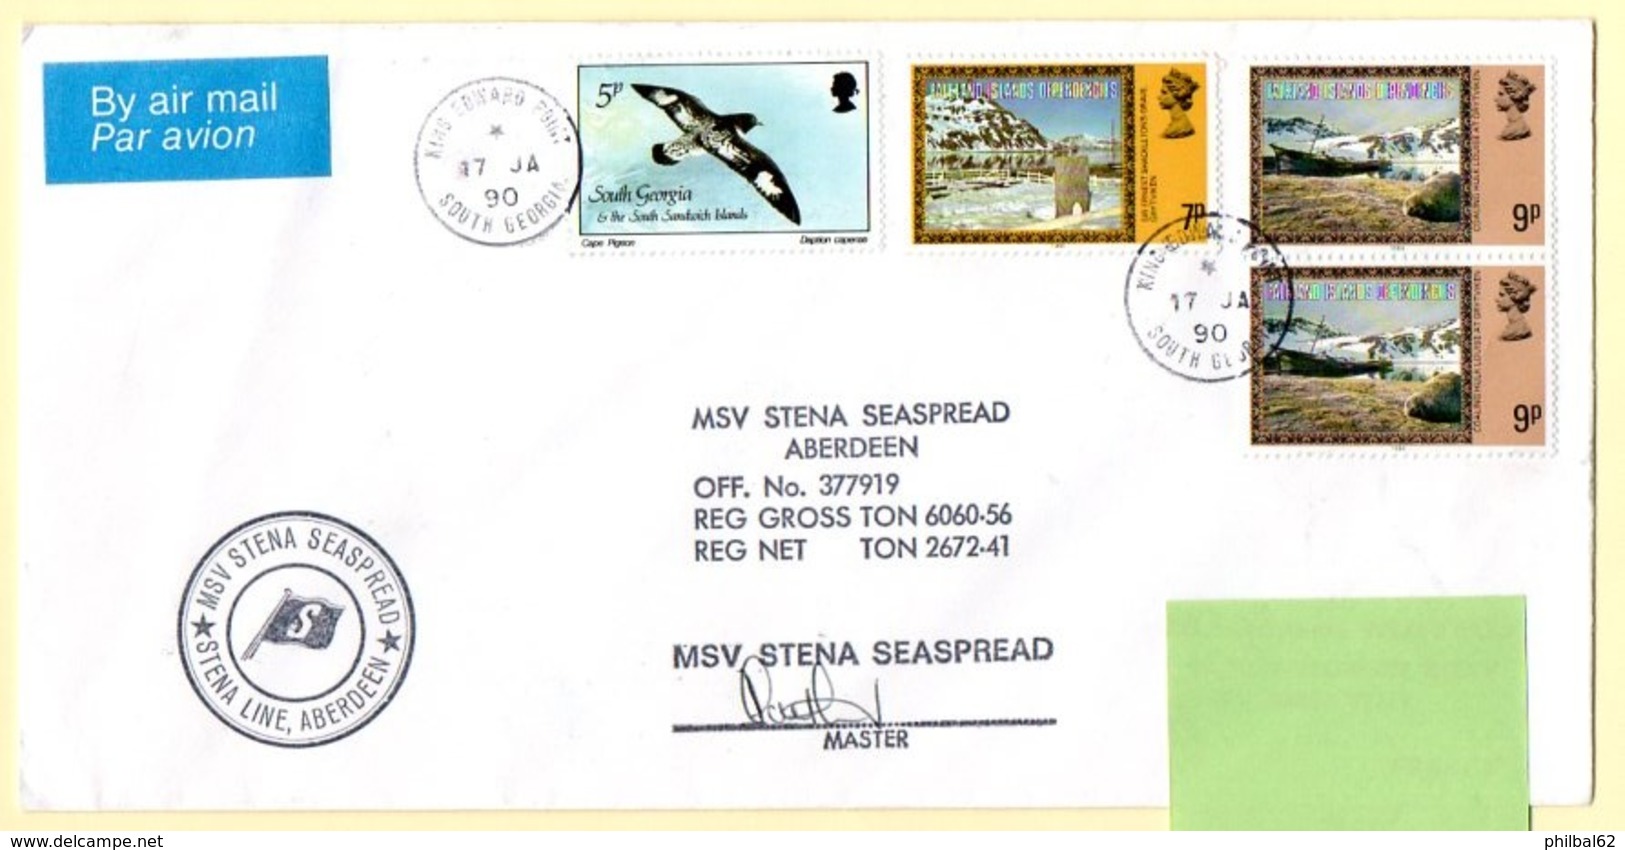 Polaire Falklands & South Georgia. Cachet MSV Stena Seaspread + Signature. Cachet à Date King Edouard South Georgia. - Forschungsprogramme